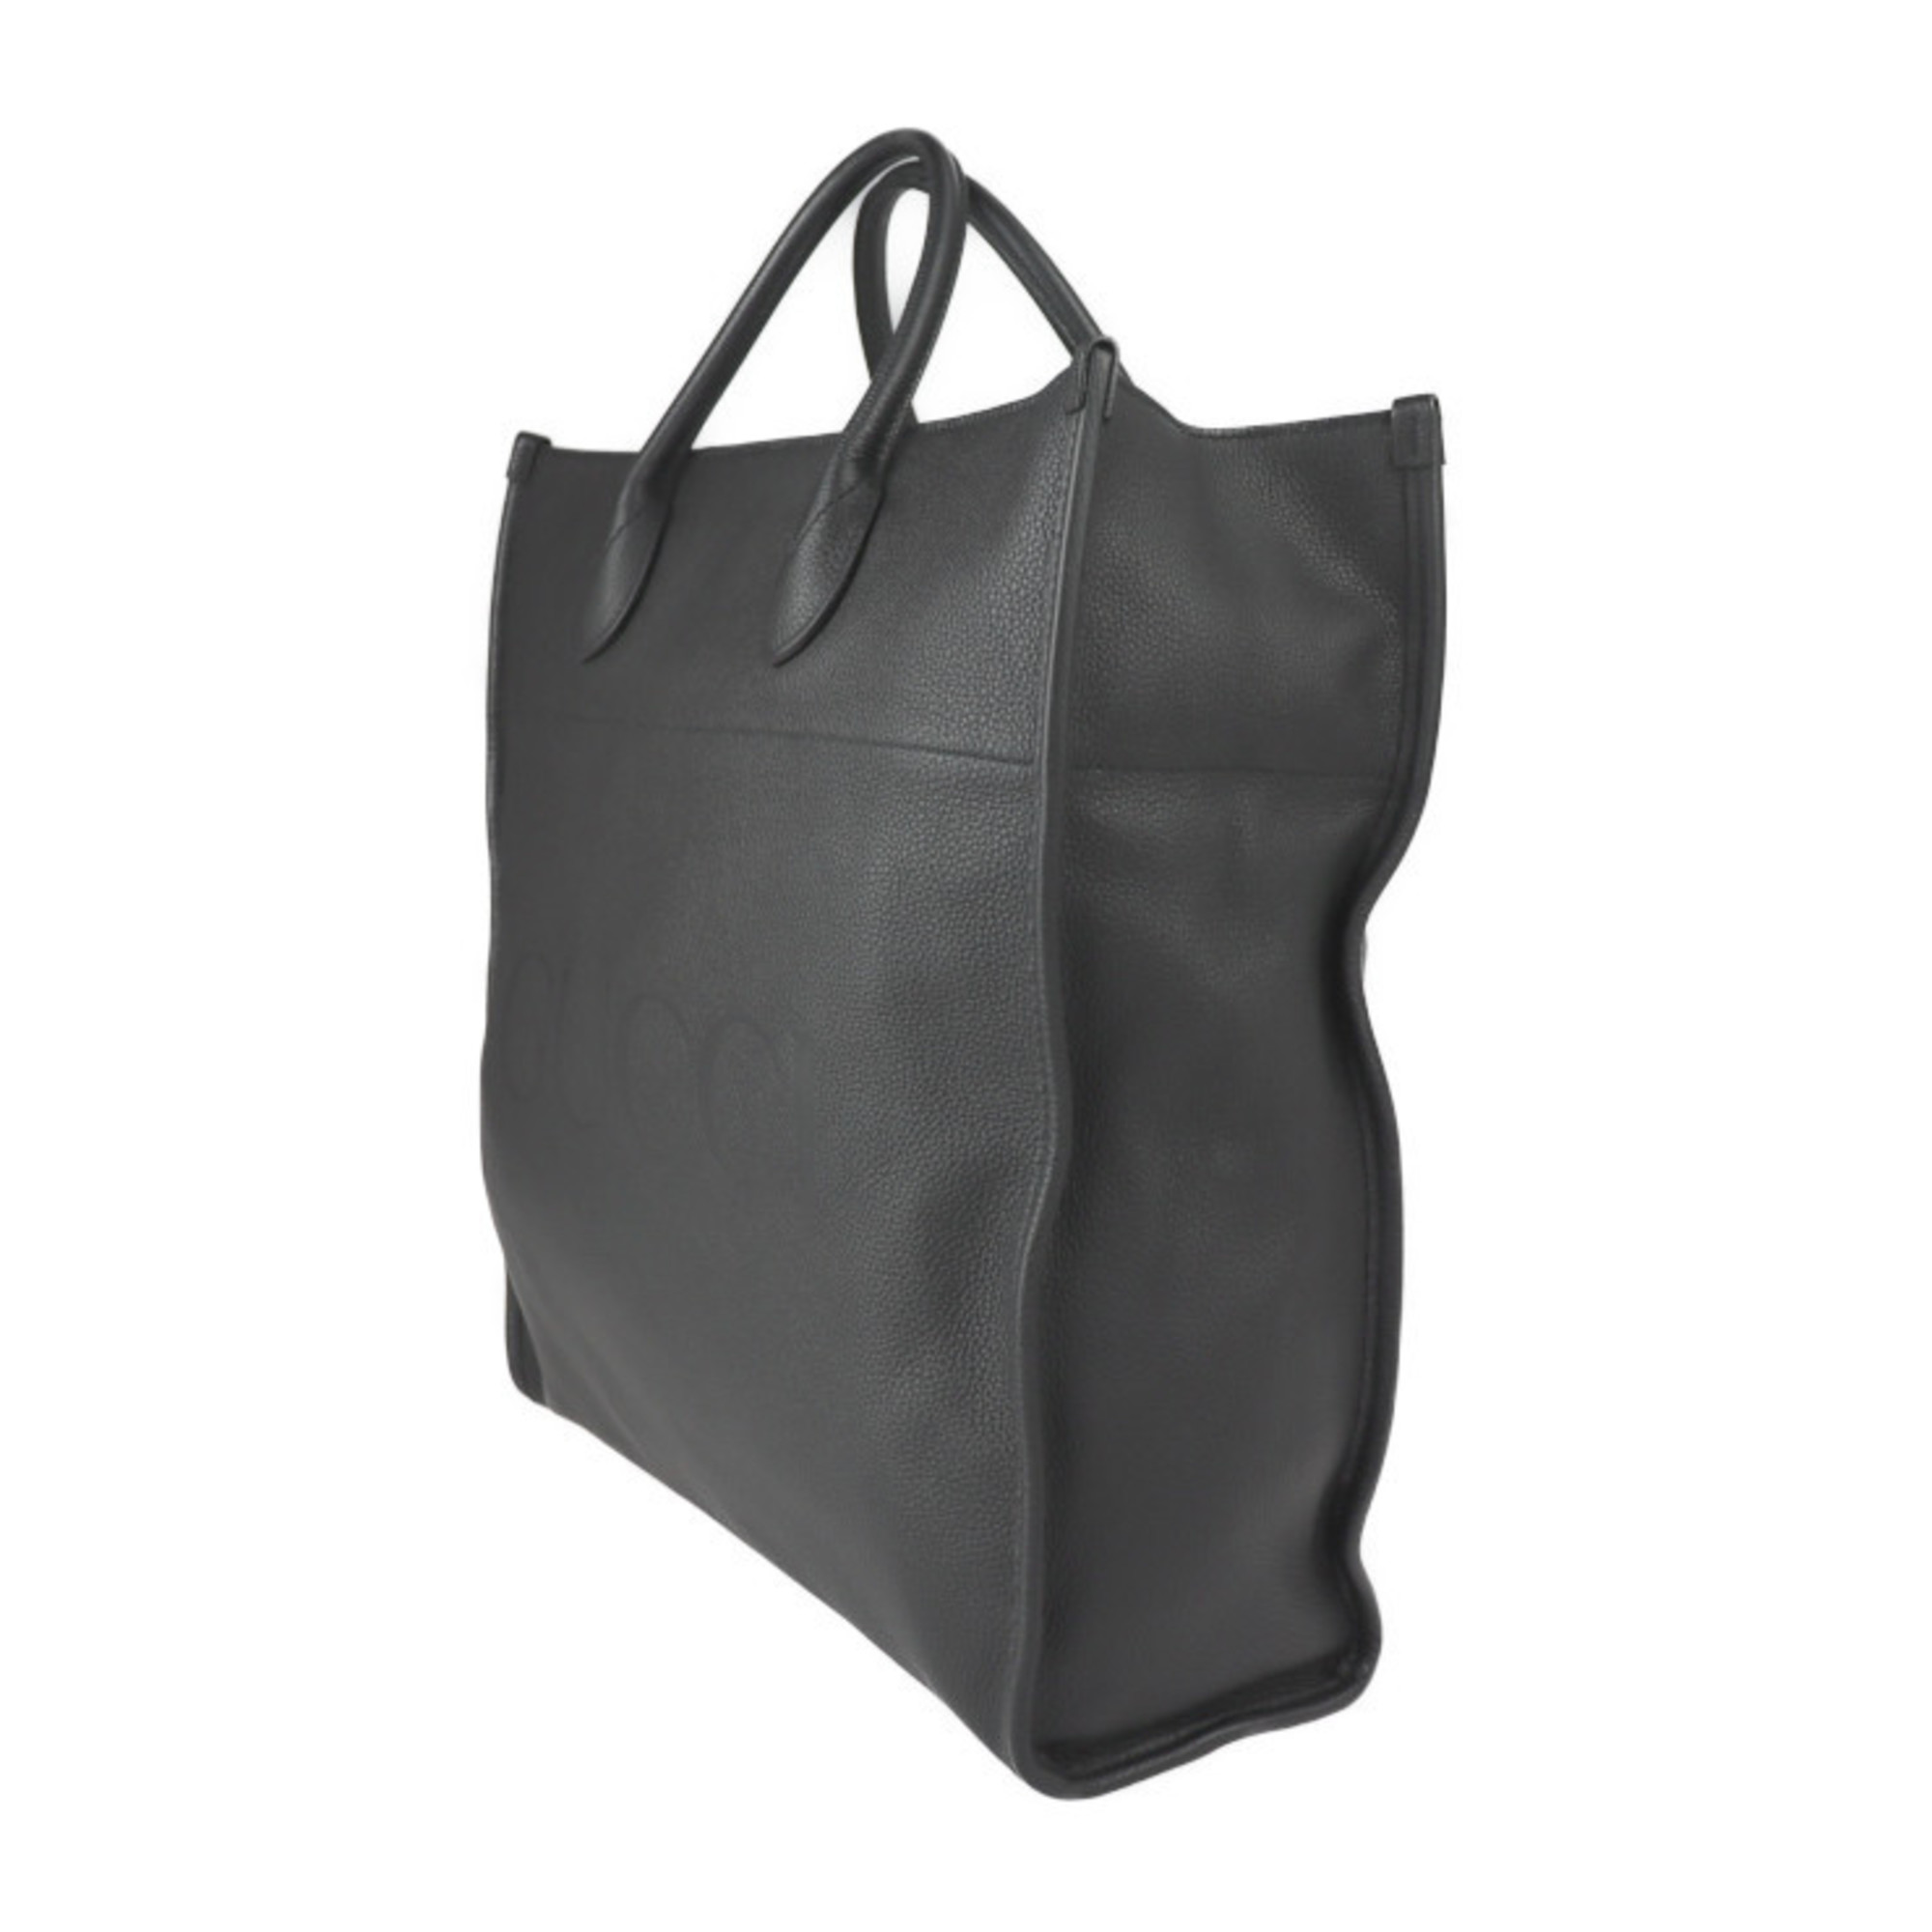 GUCCI Gucci Logo Medium Tote Bag Shoulder 674850 Embossed Leather Black Gold Hardware 2WAY Handbag 2022 Current Product